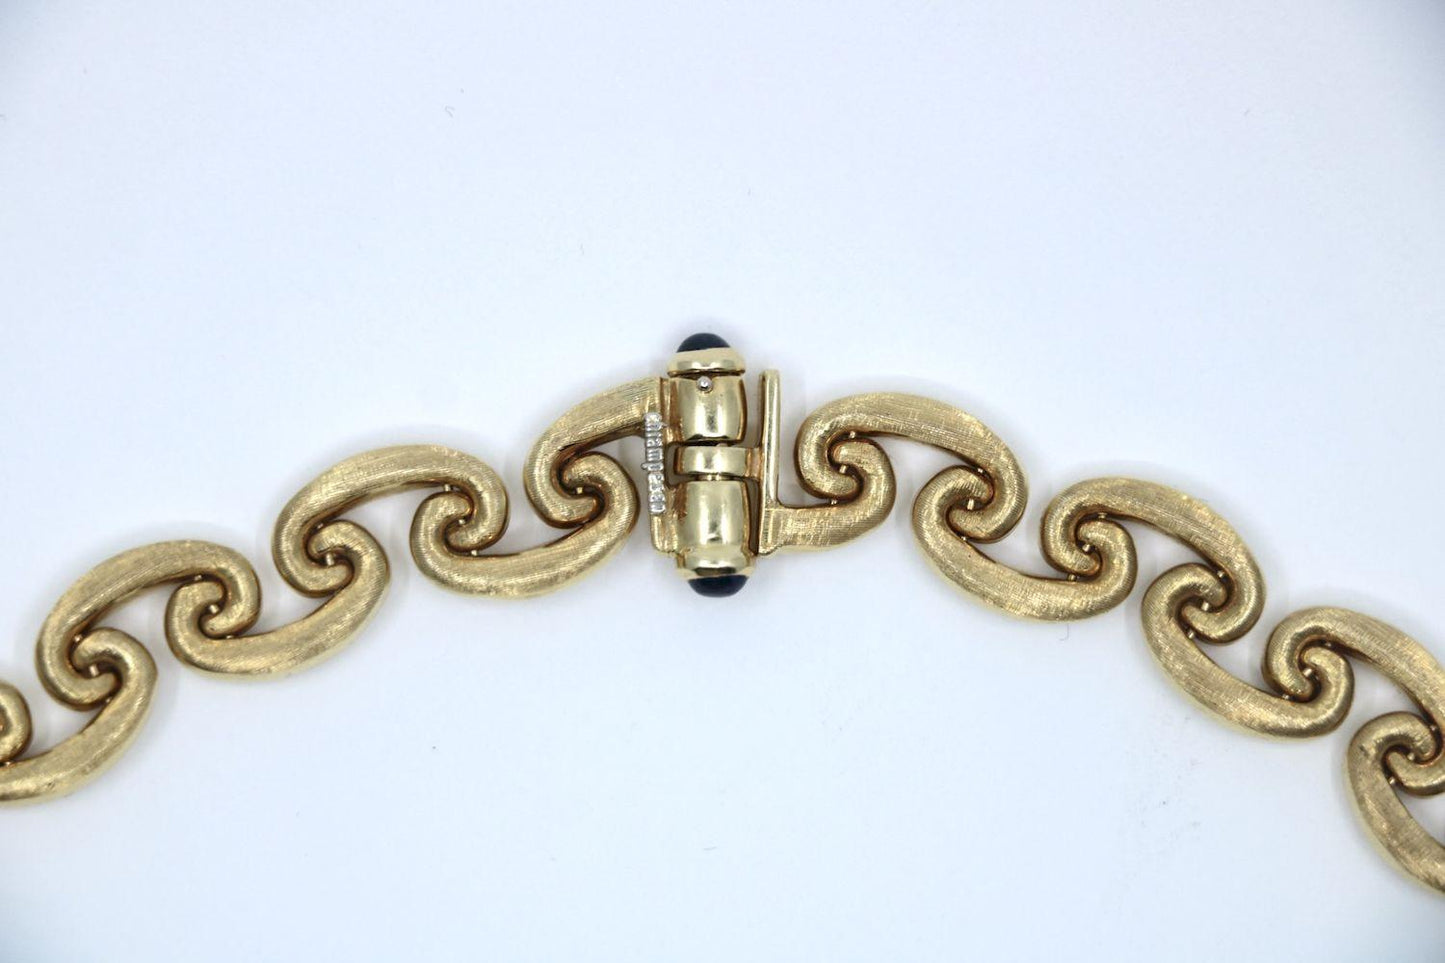 Vintage Chiampesan 18K Gold Mariner Chain Necklace